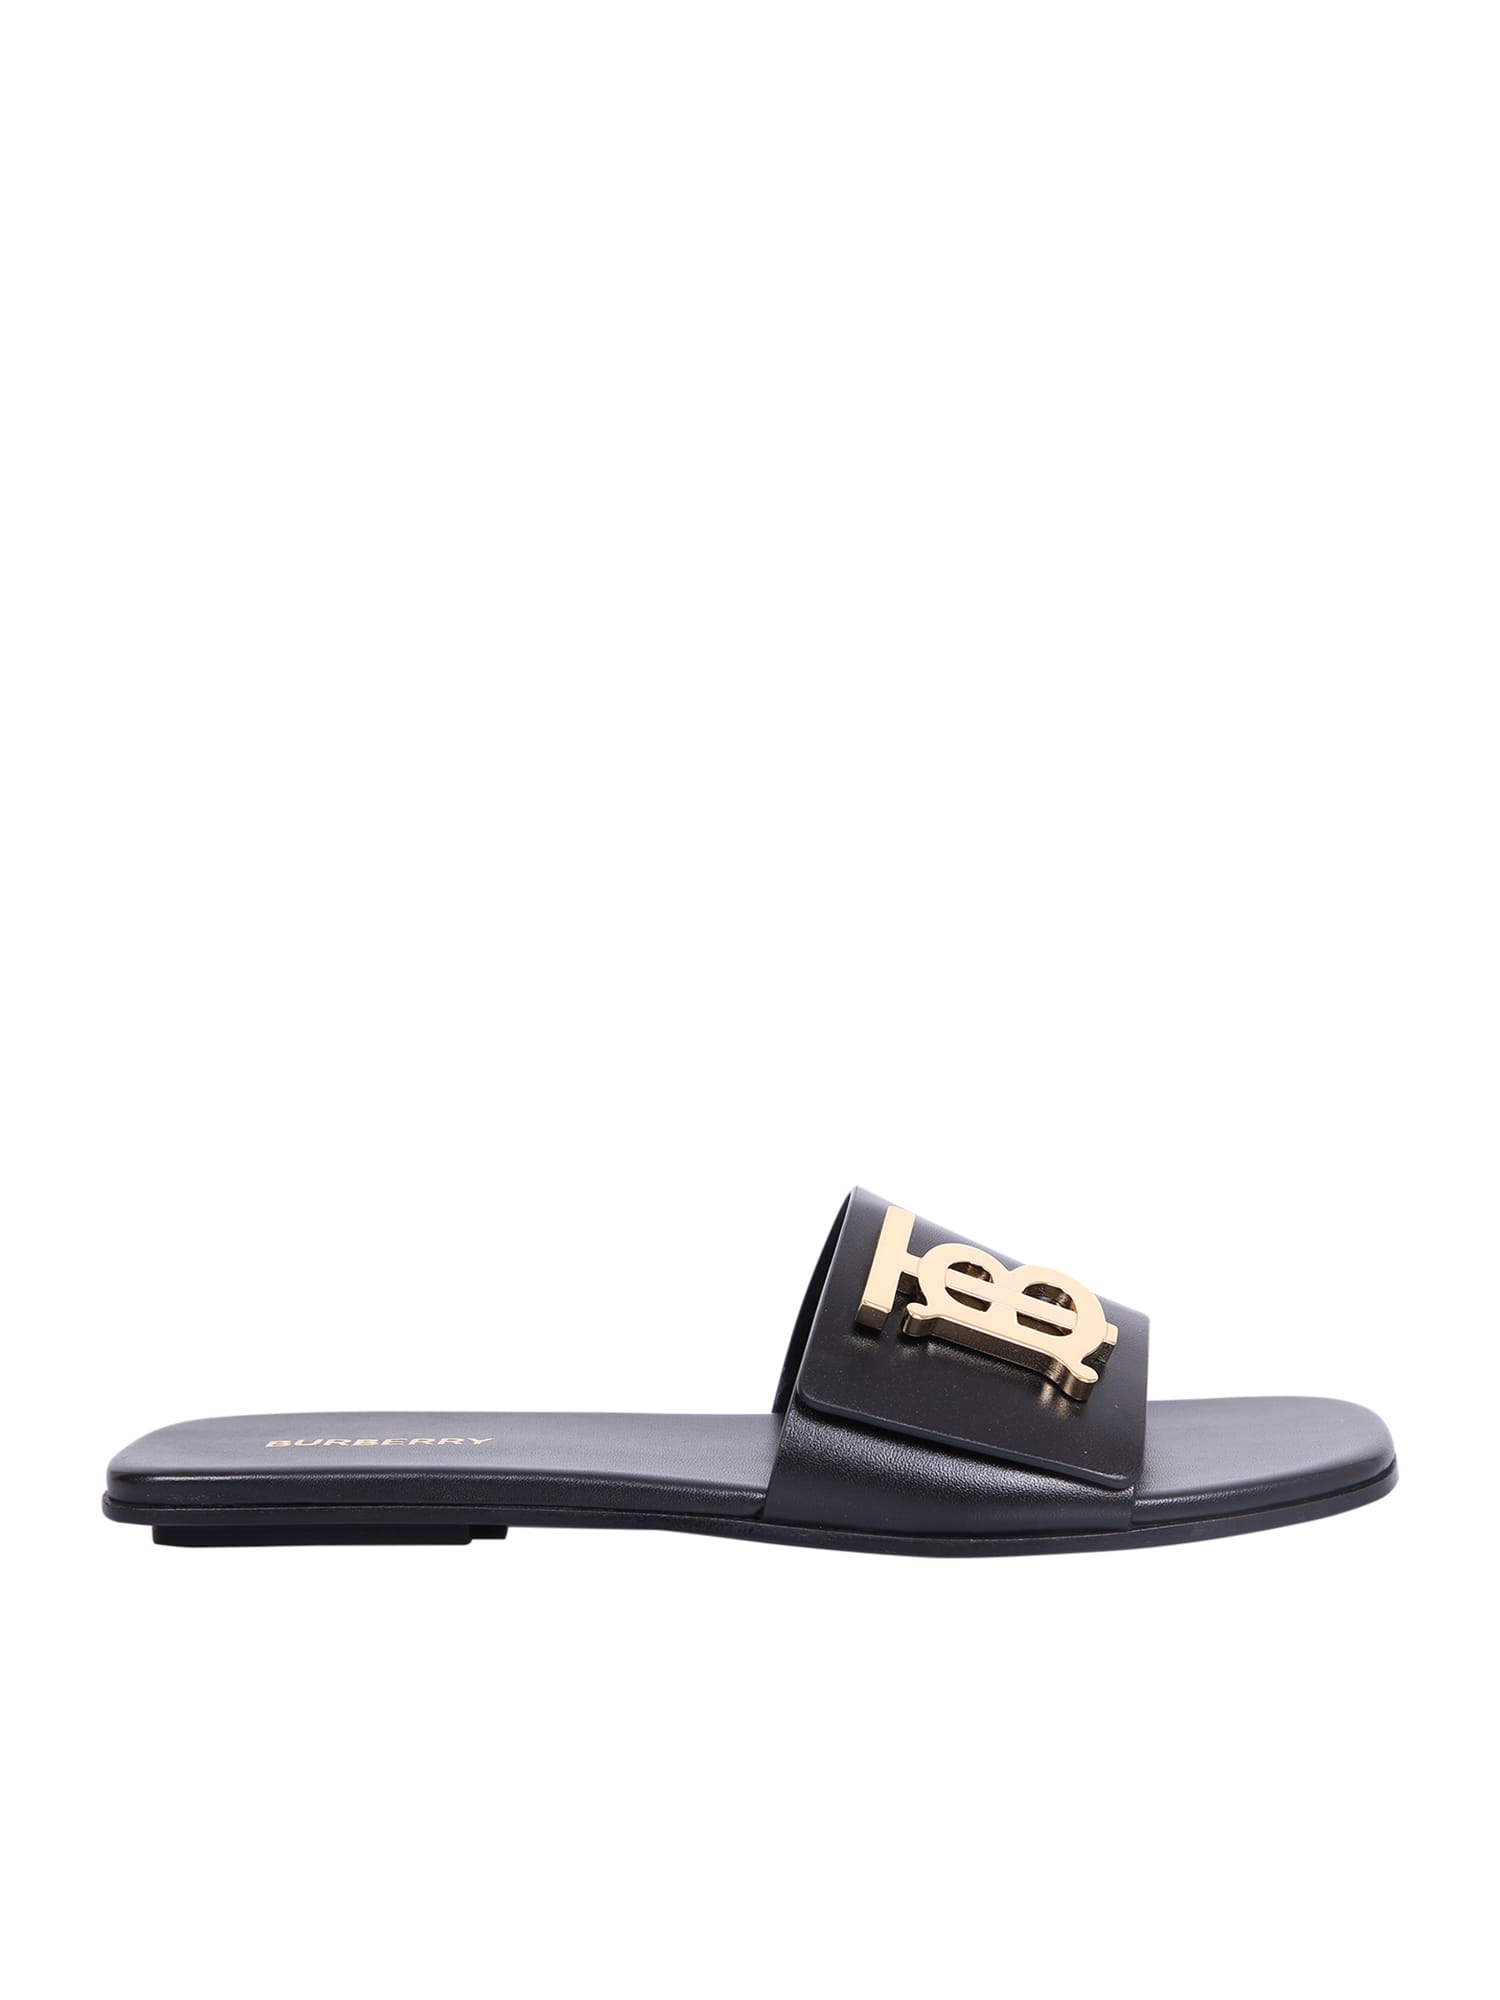 Burberry Monogram Leather Sandals